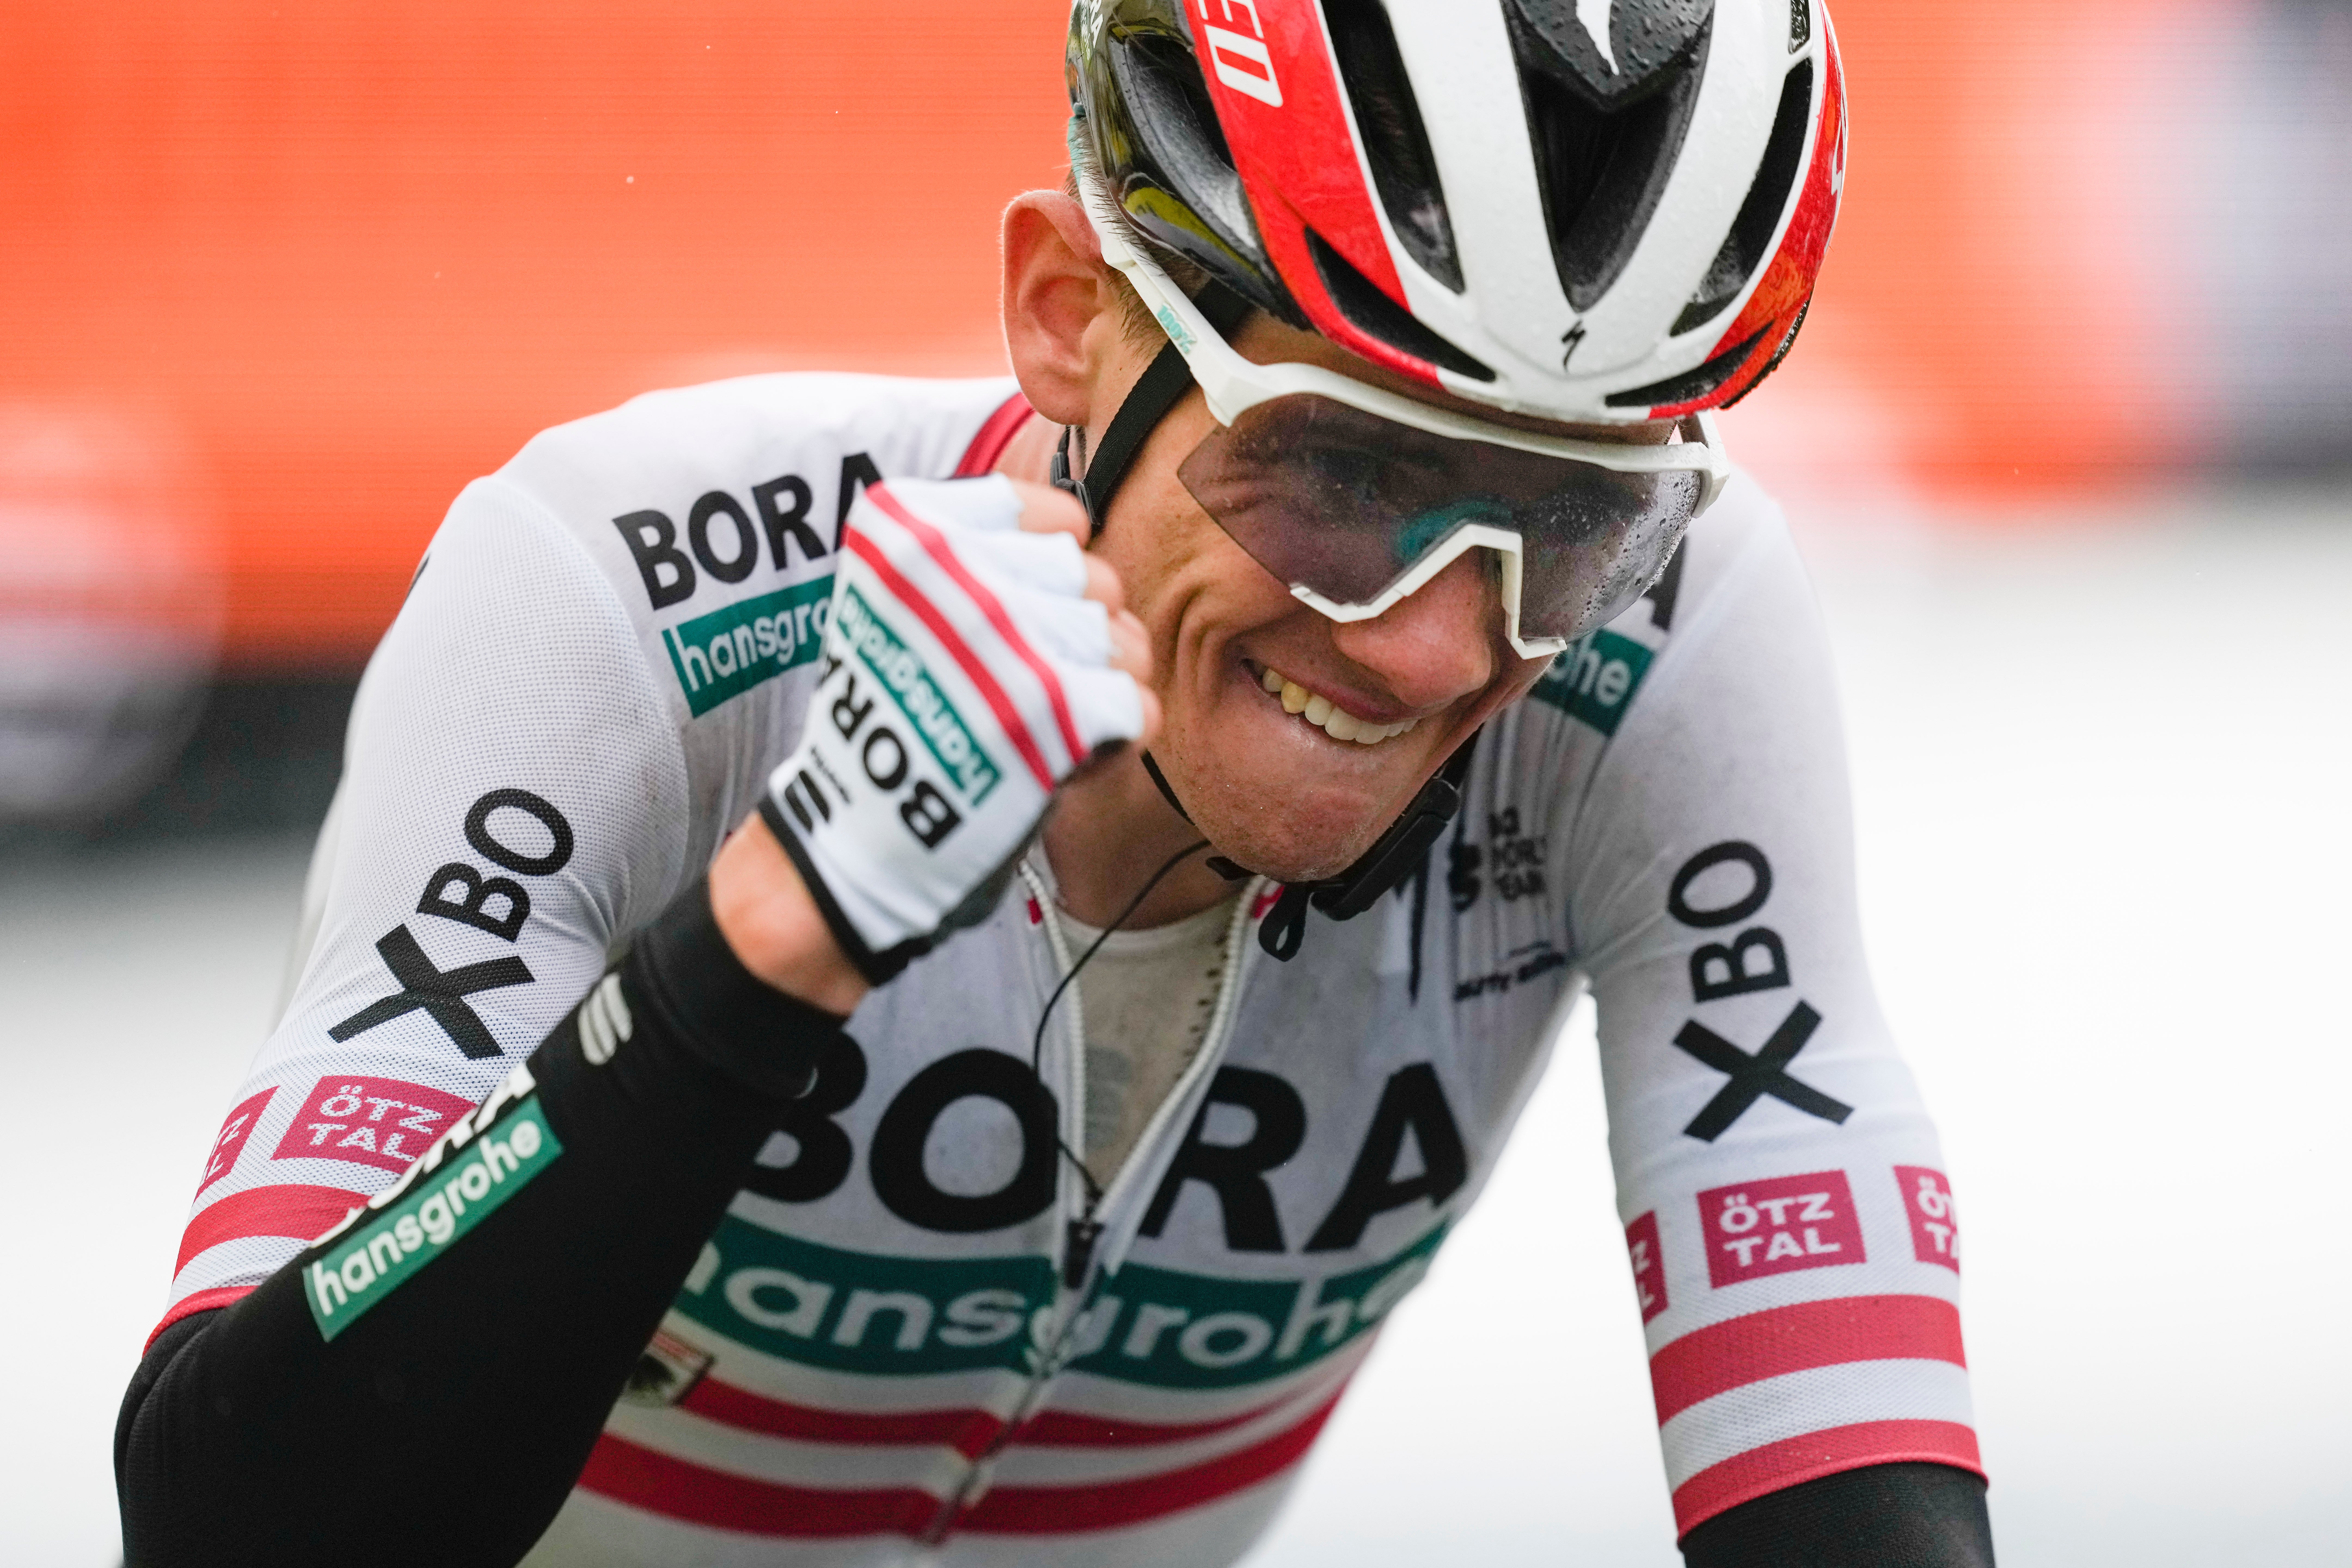 Patrick Konrad celebrates winning stage 16